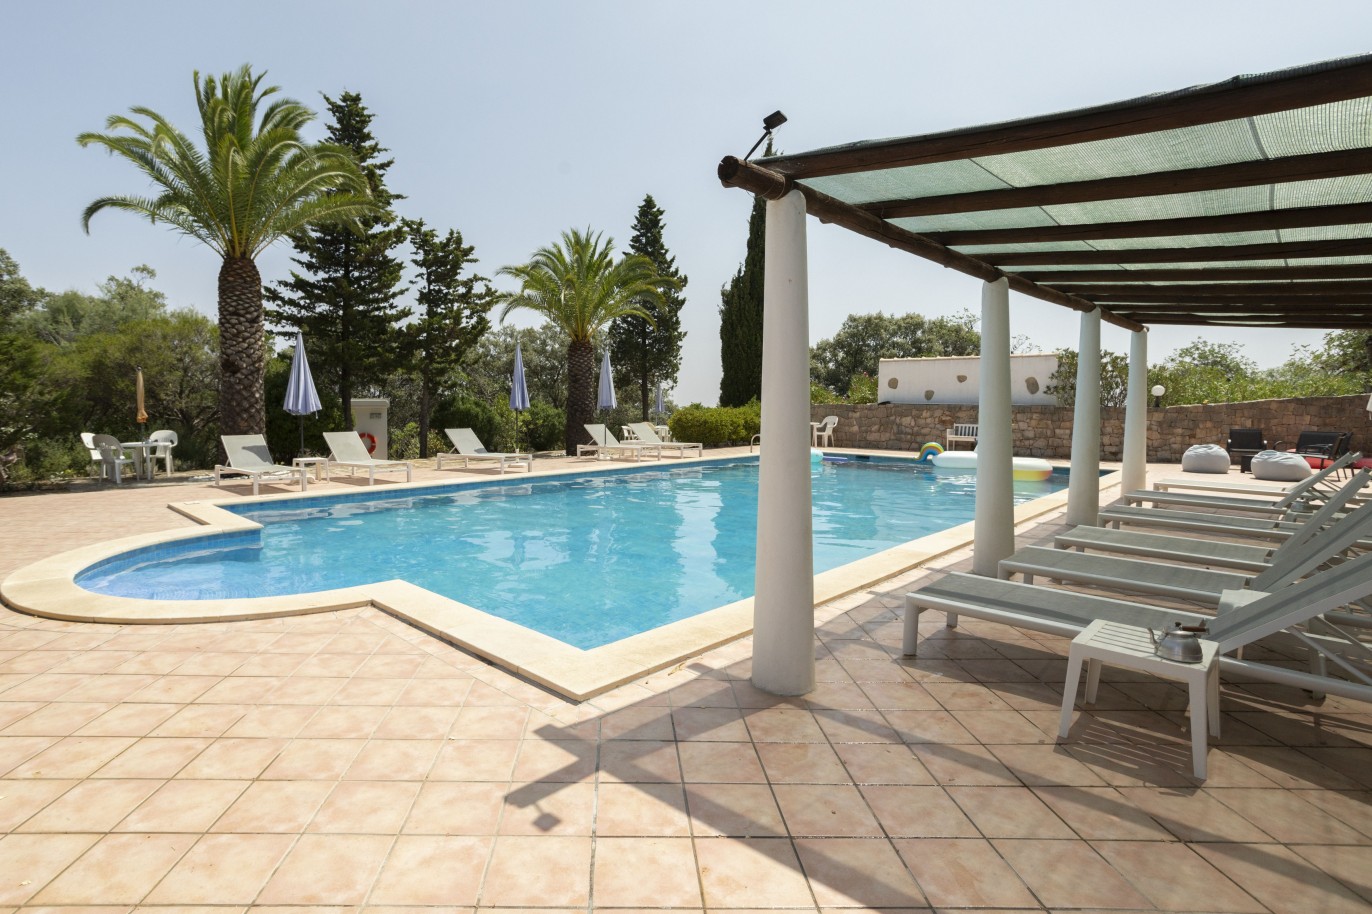 7 Bed Country Villa with swimming pool for sale in Estoi, Algarve_230972